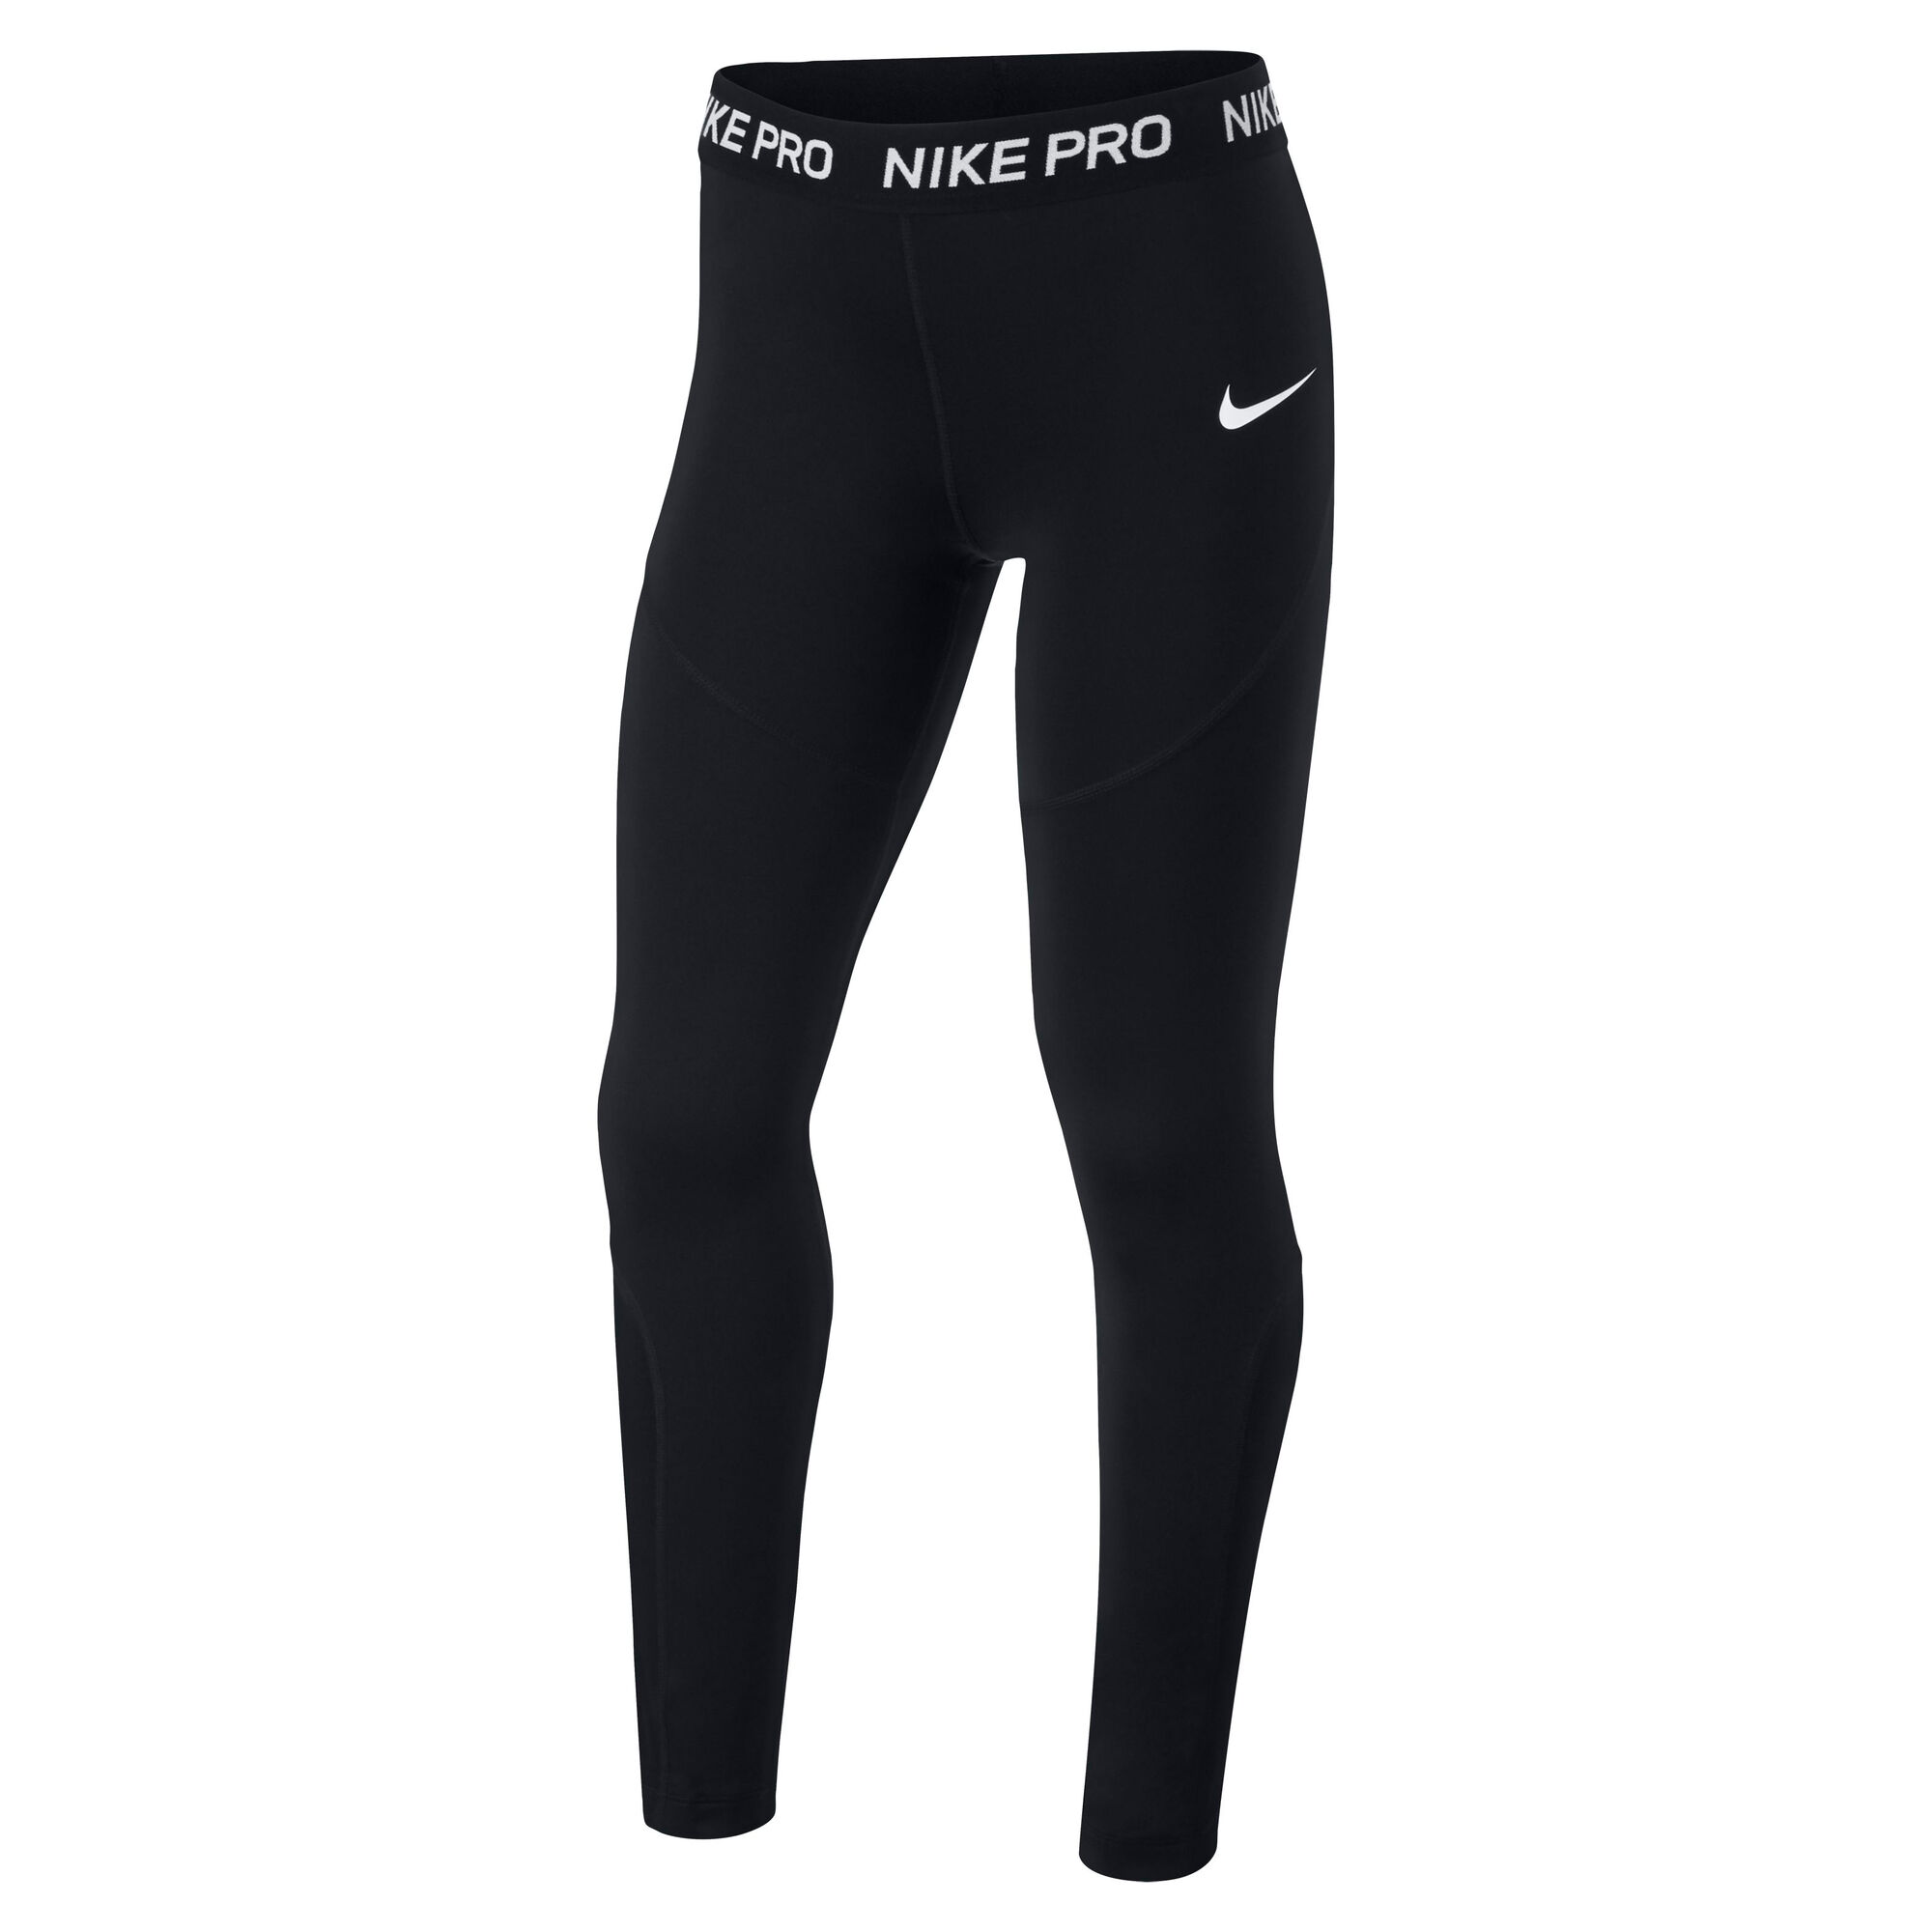 buy Nike Pro Tight Girls - White online | Tennis-Point